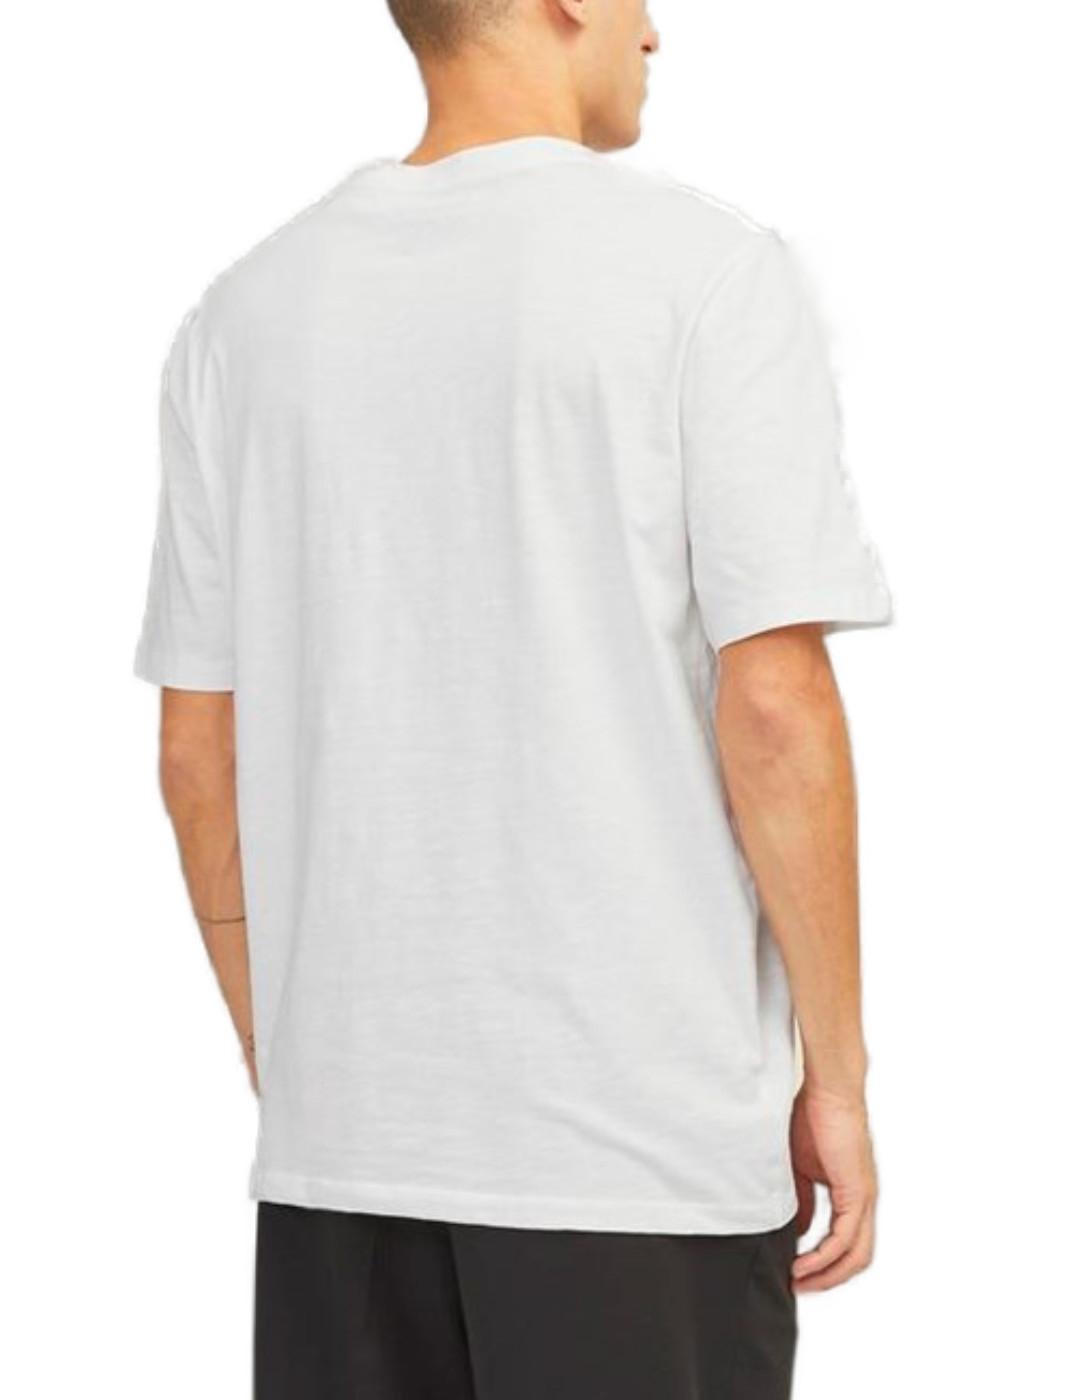 Camiseta Jack&Jones Lafayette blanca manga corta de hombre